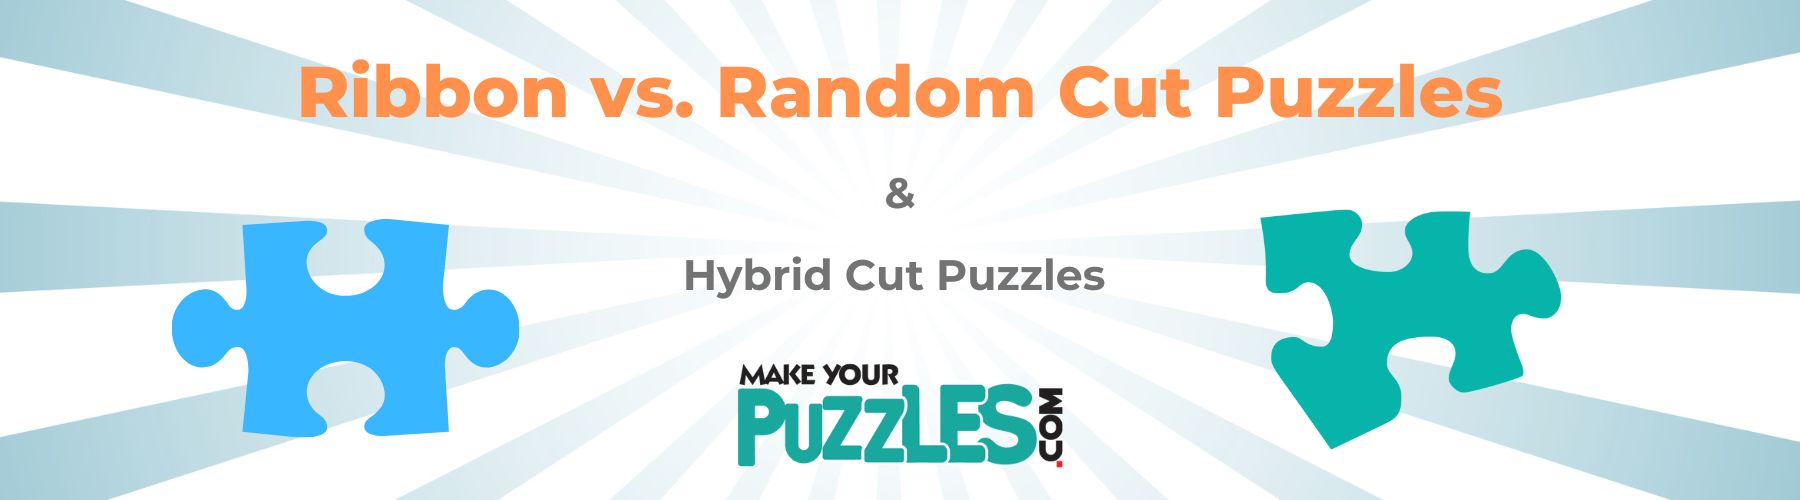 Ribbon vs. Random Cut Puzzles & Hybrid Cut Puzzles | MakeYourPuzzles